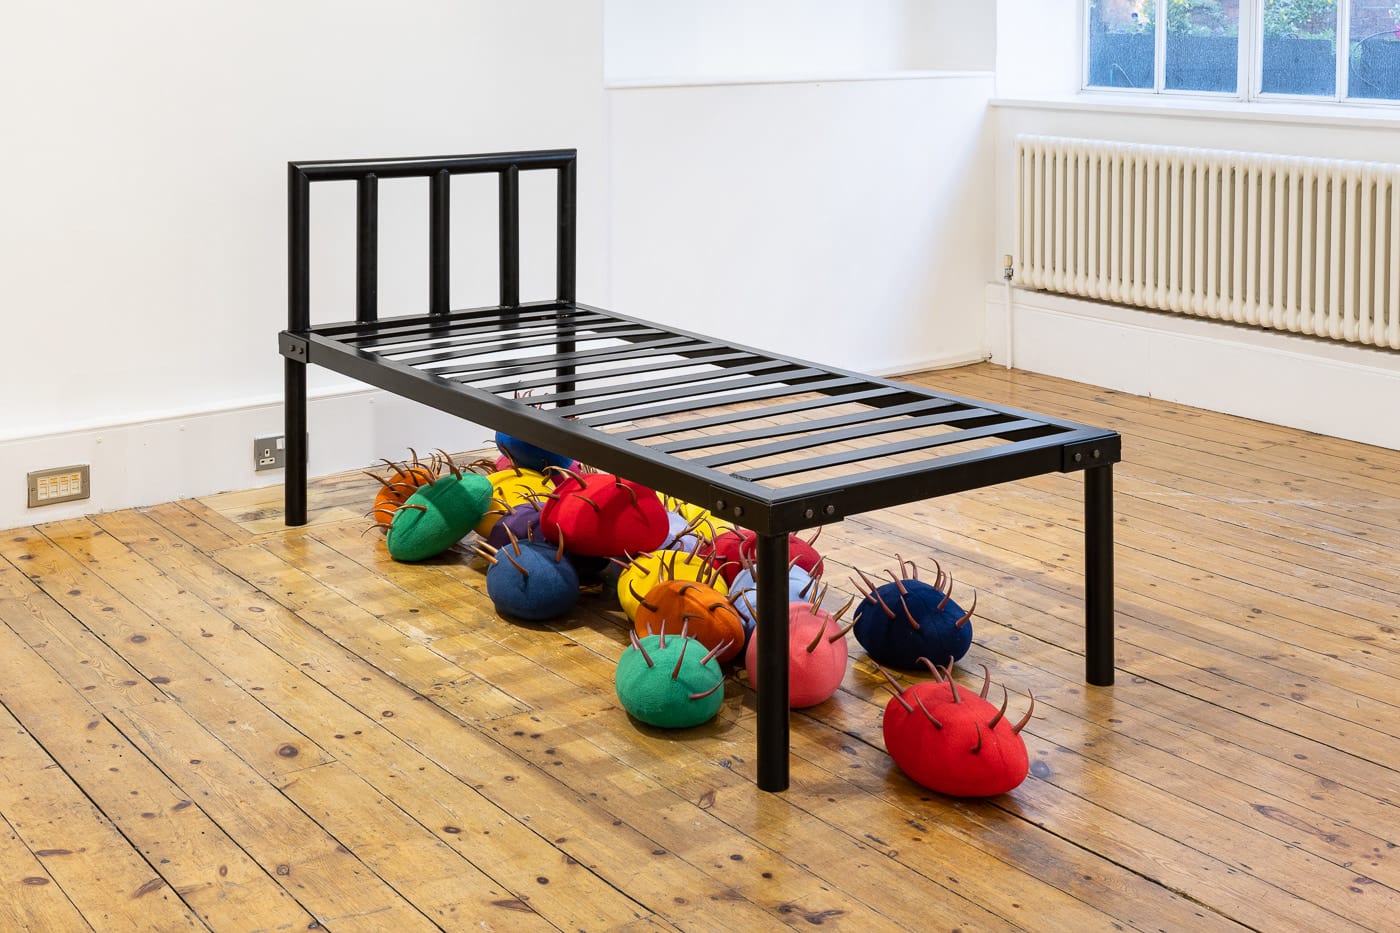 Permindar Kaur, Untitled (bed), 2020